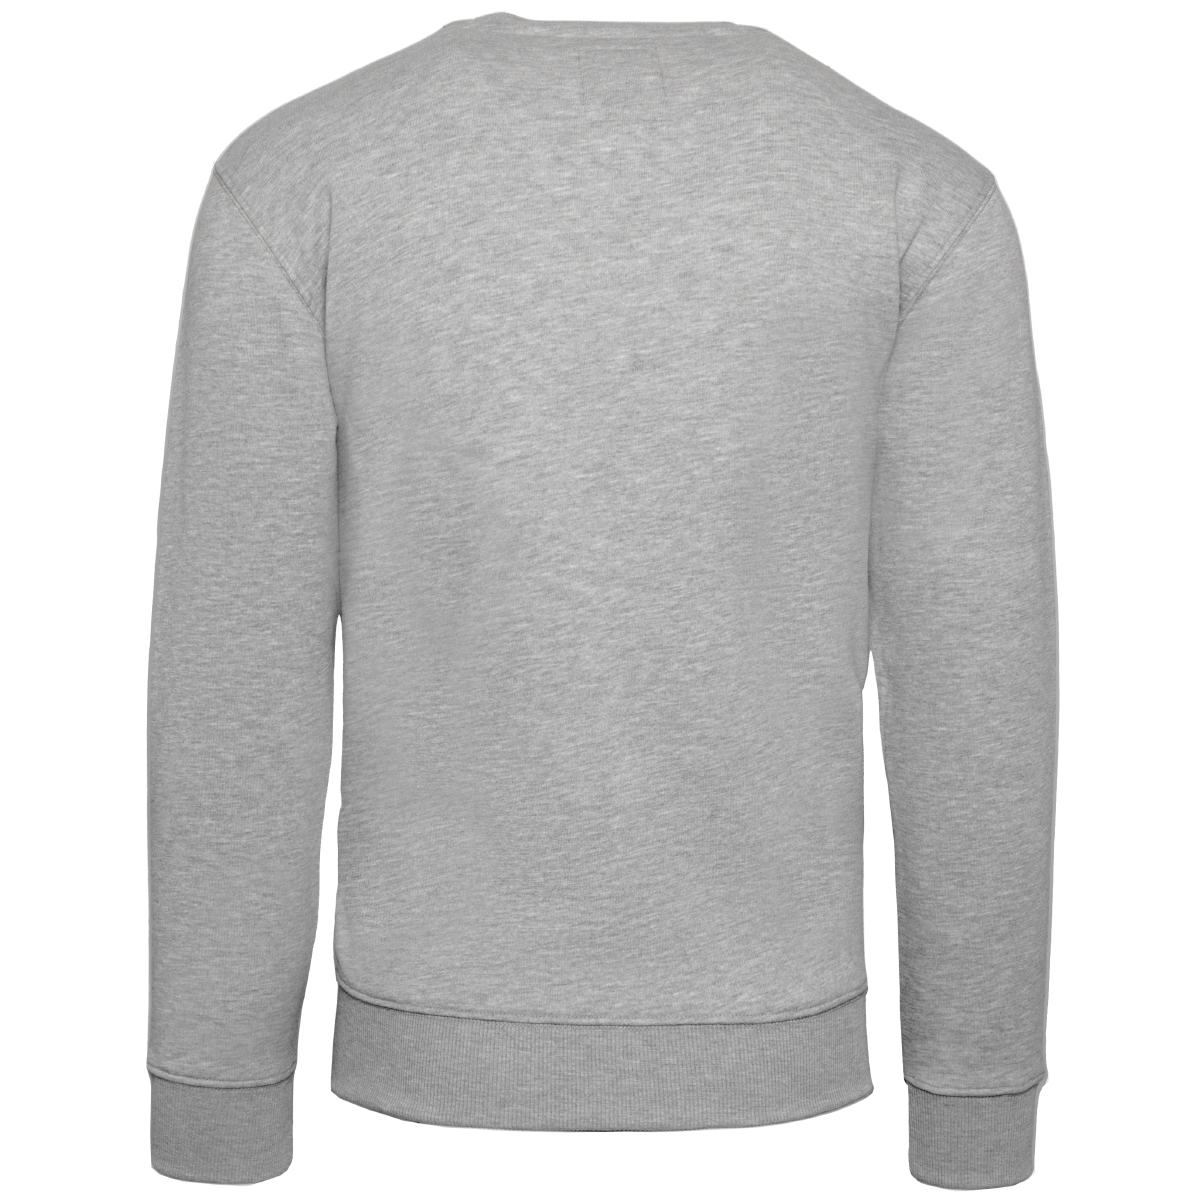 Alpha Industries Basic Sweater Sweatshirt